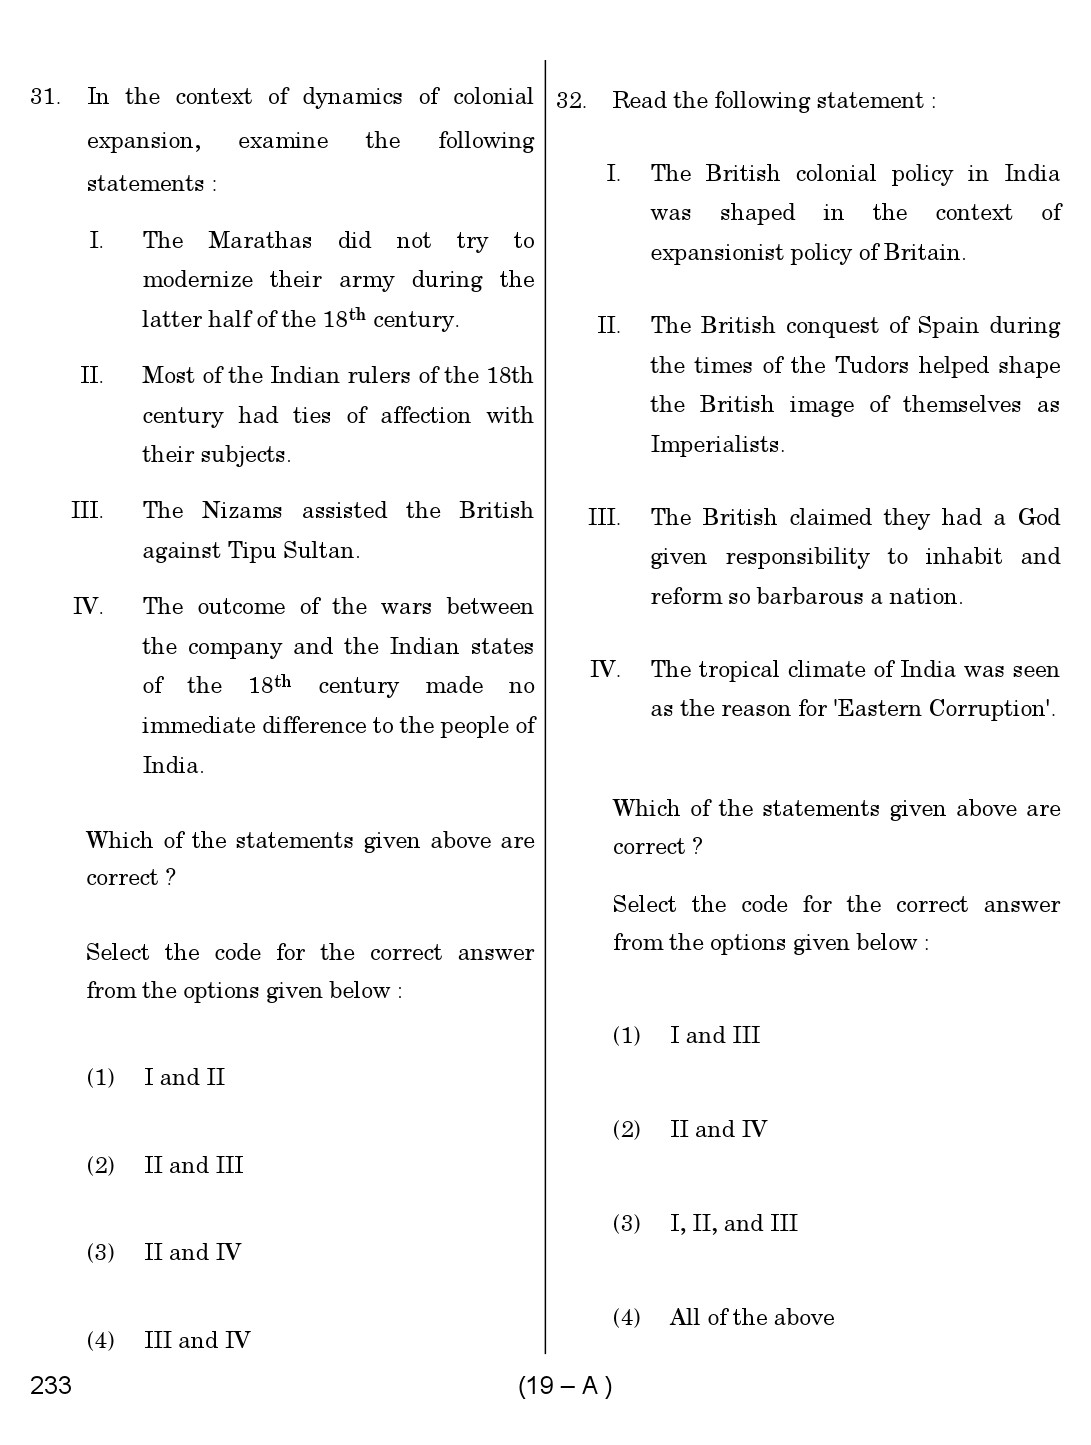 Karnataka PSC History Teacher Exam Sample Question Paper Subject code 233 19